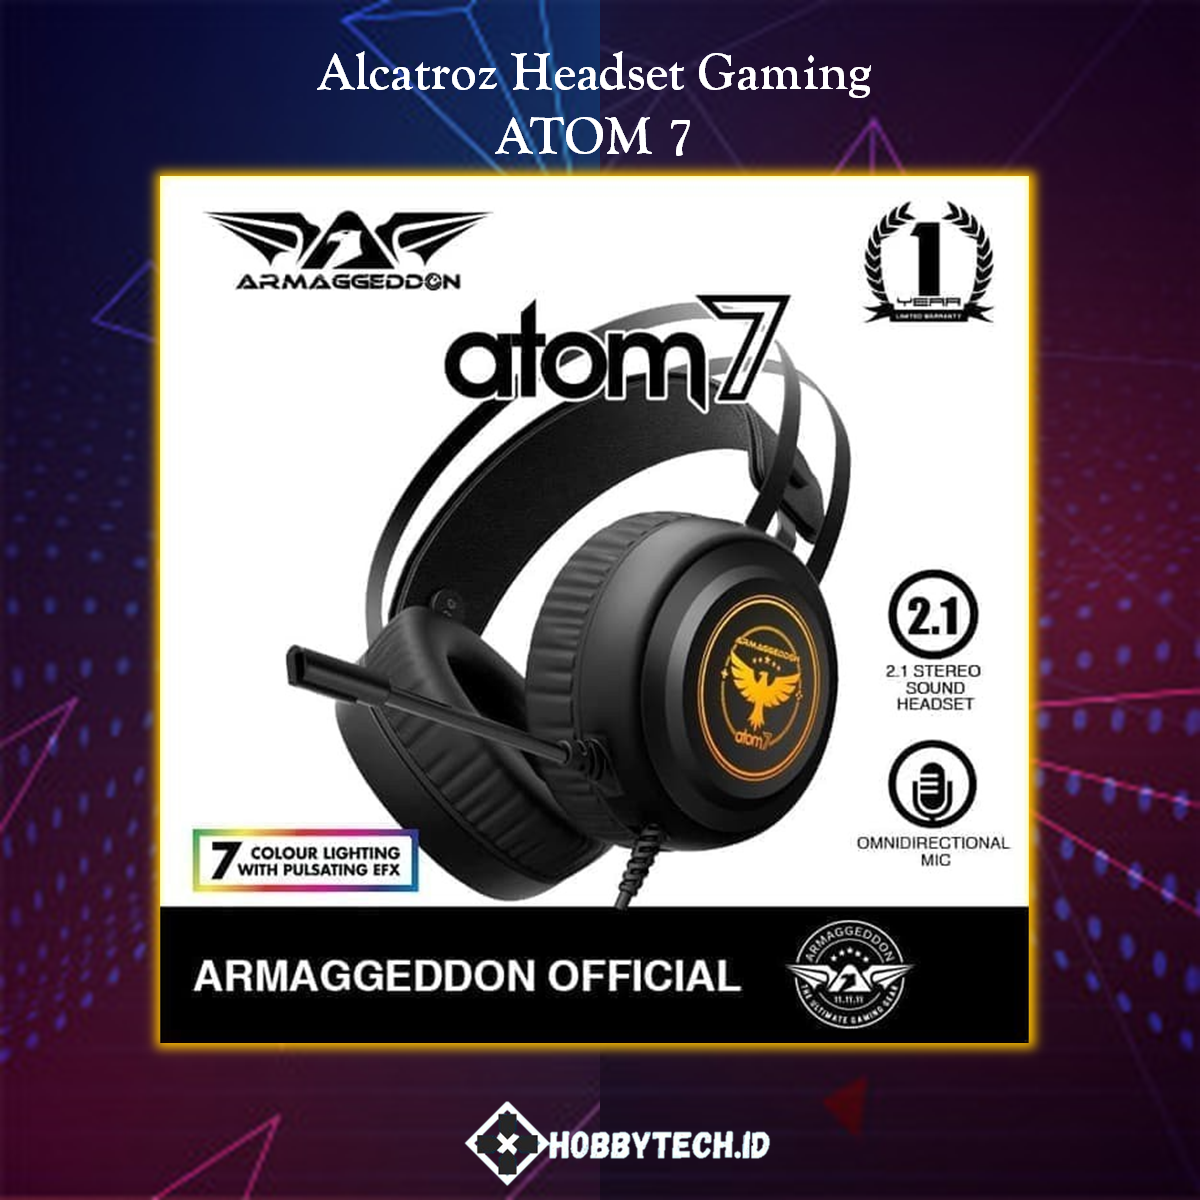 Headset Gaming Armaggeddon Atom 7 (7 Colour Lighting Pulsating EFX)